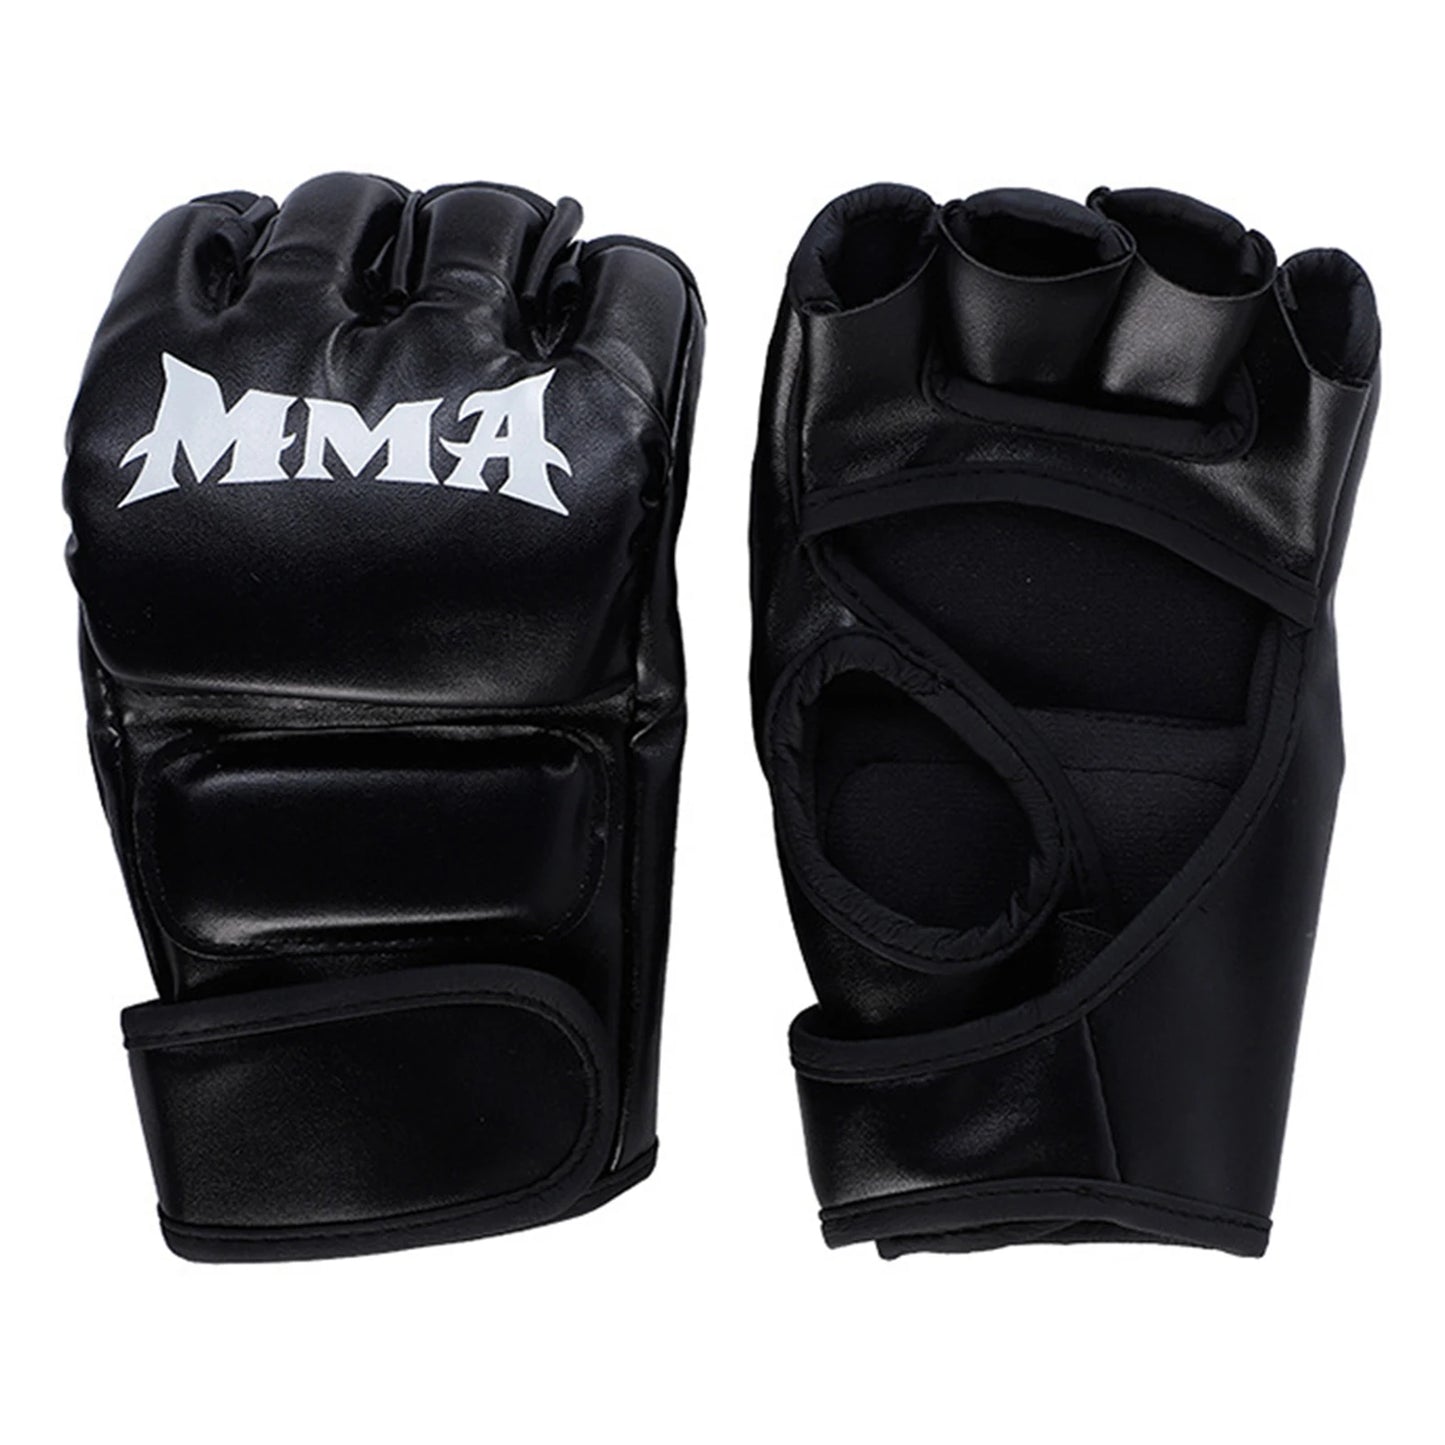 Kick MMA Boxing Gloves for Men Women PU Karate Muay Thai Guantes De Boxeo Free Fight MMA Sanda Training Adults Kids Equipment